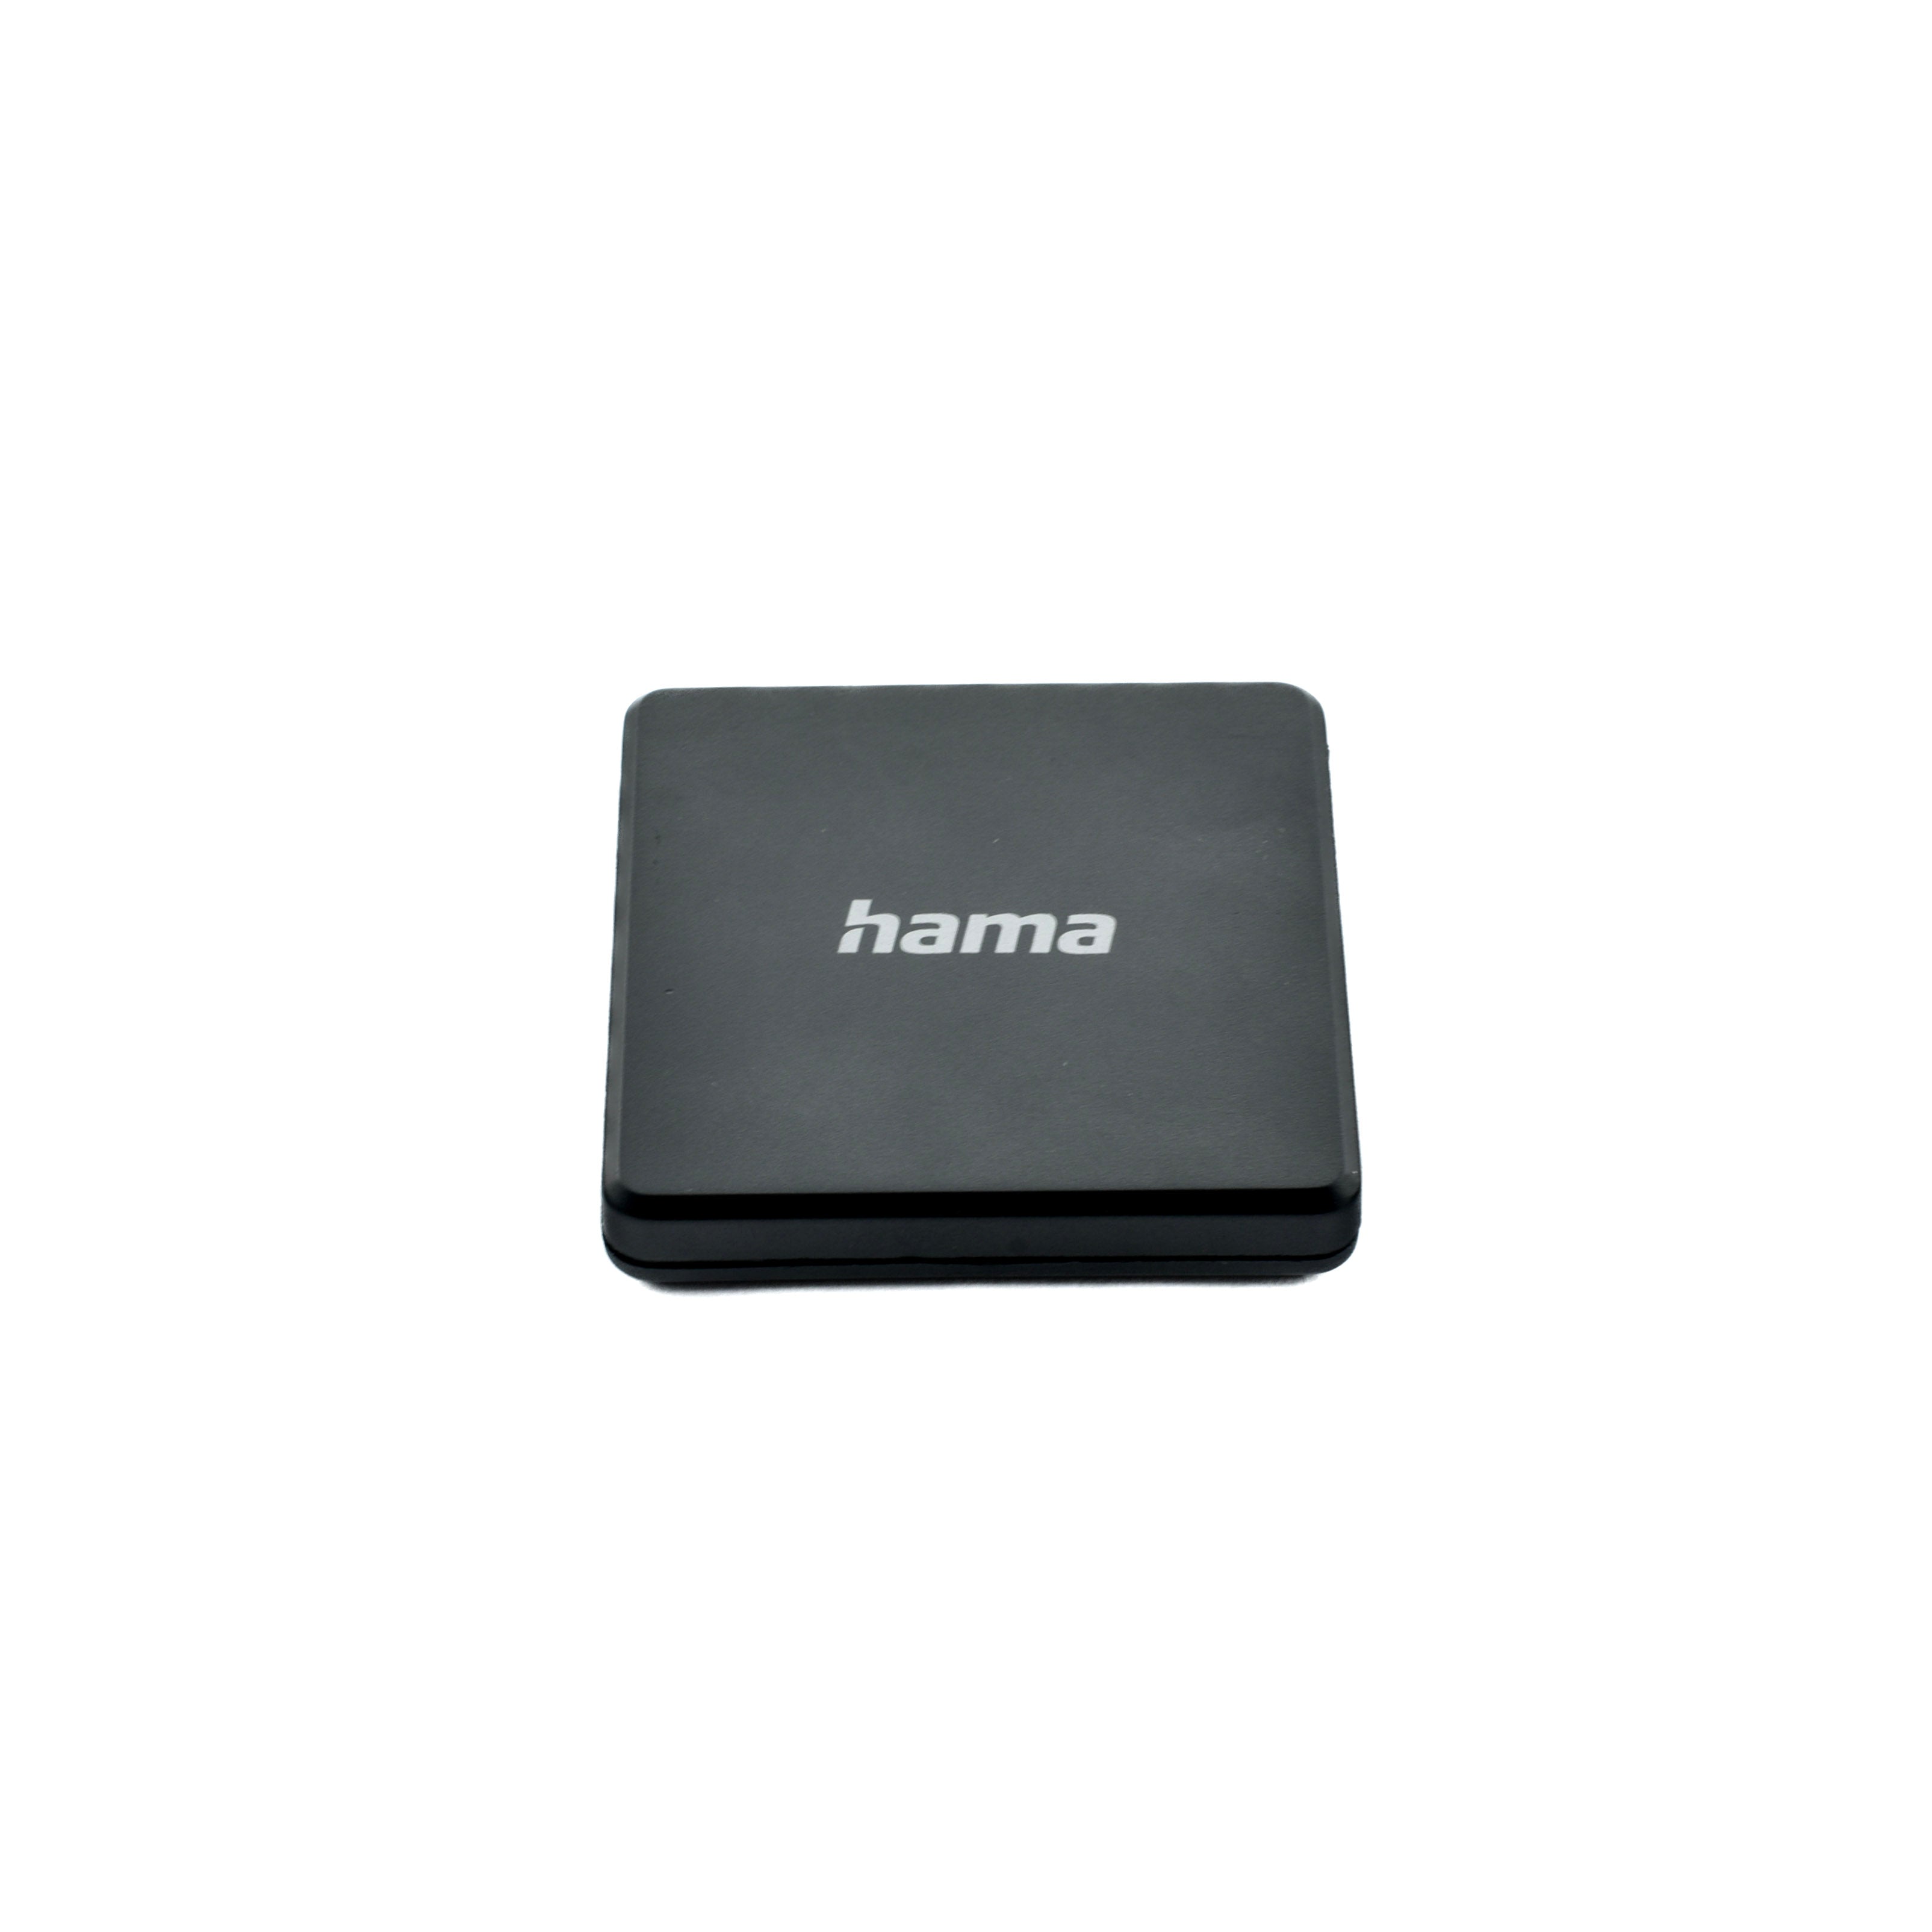 Hama USB 3.0 Dual Slot Card Reader